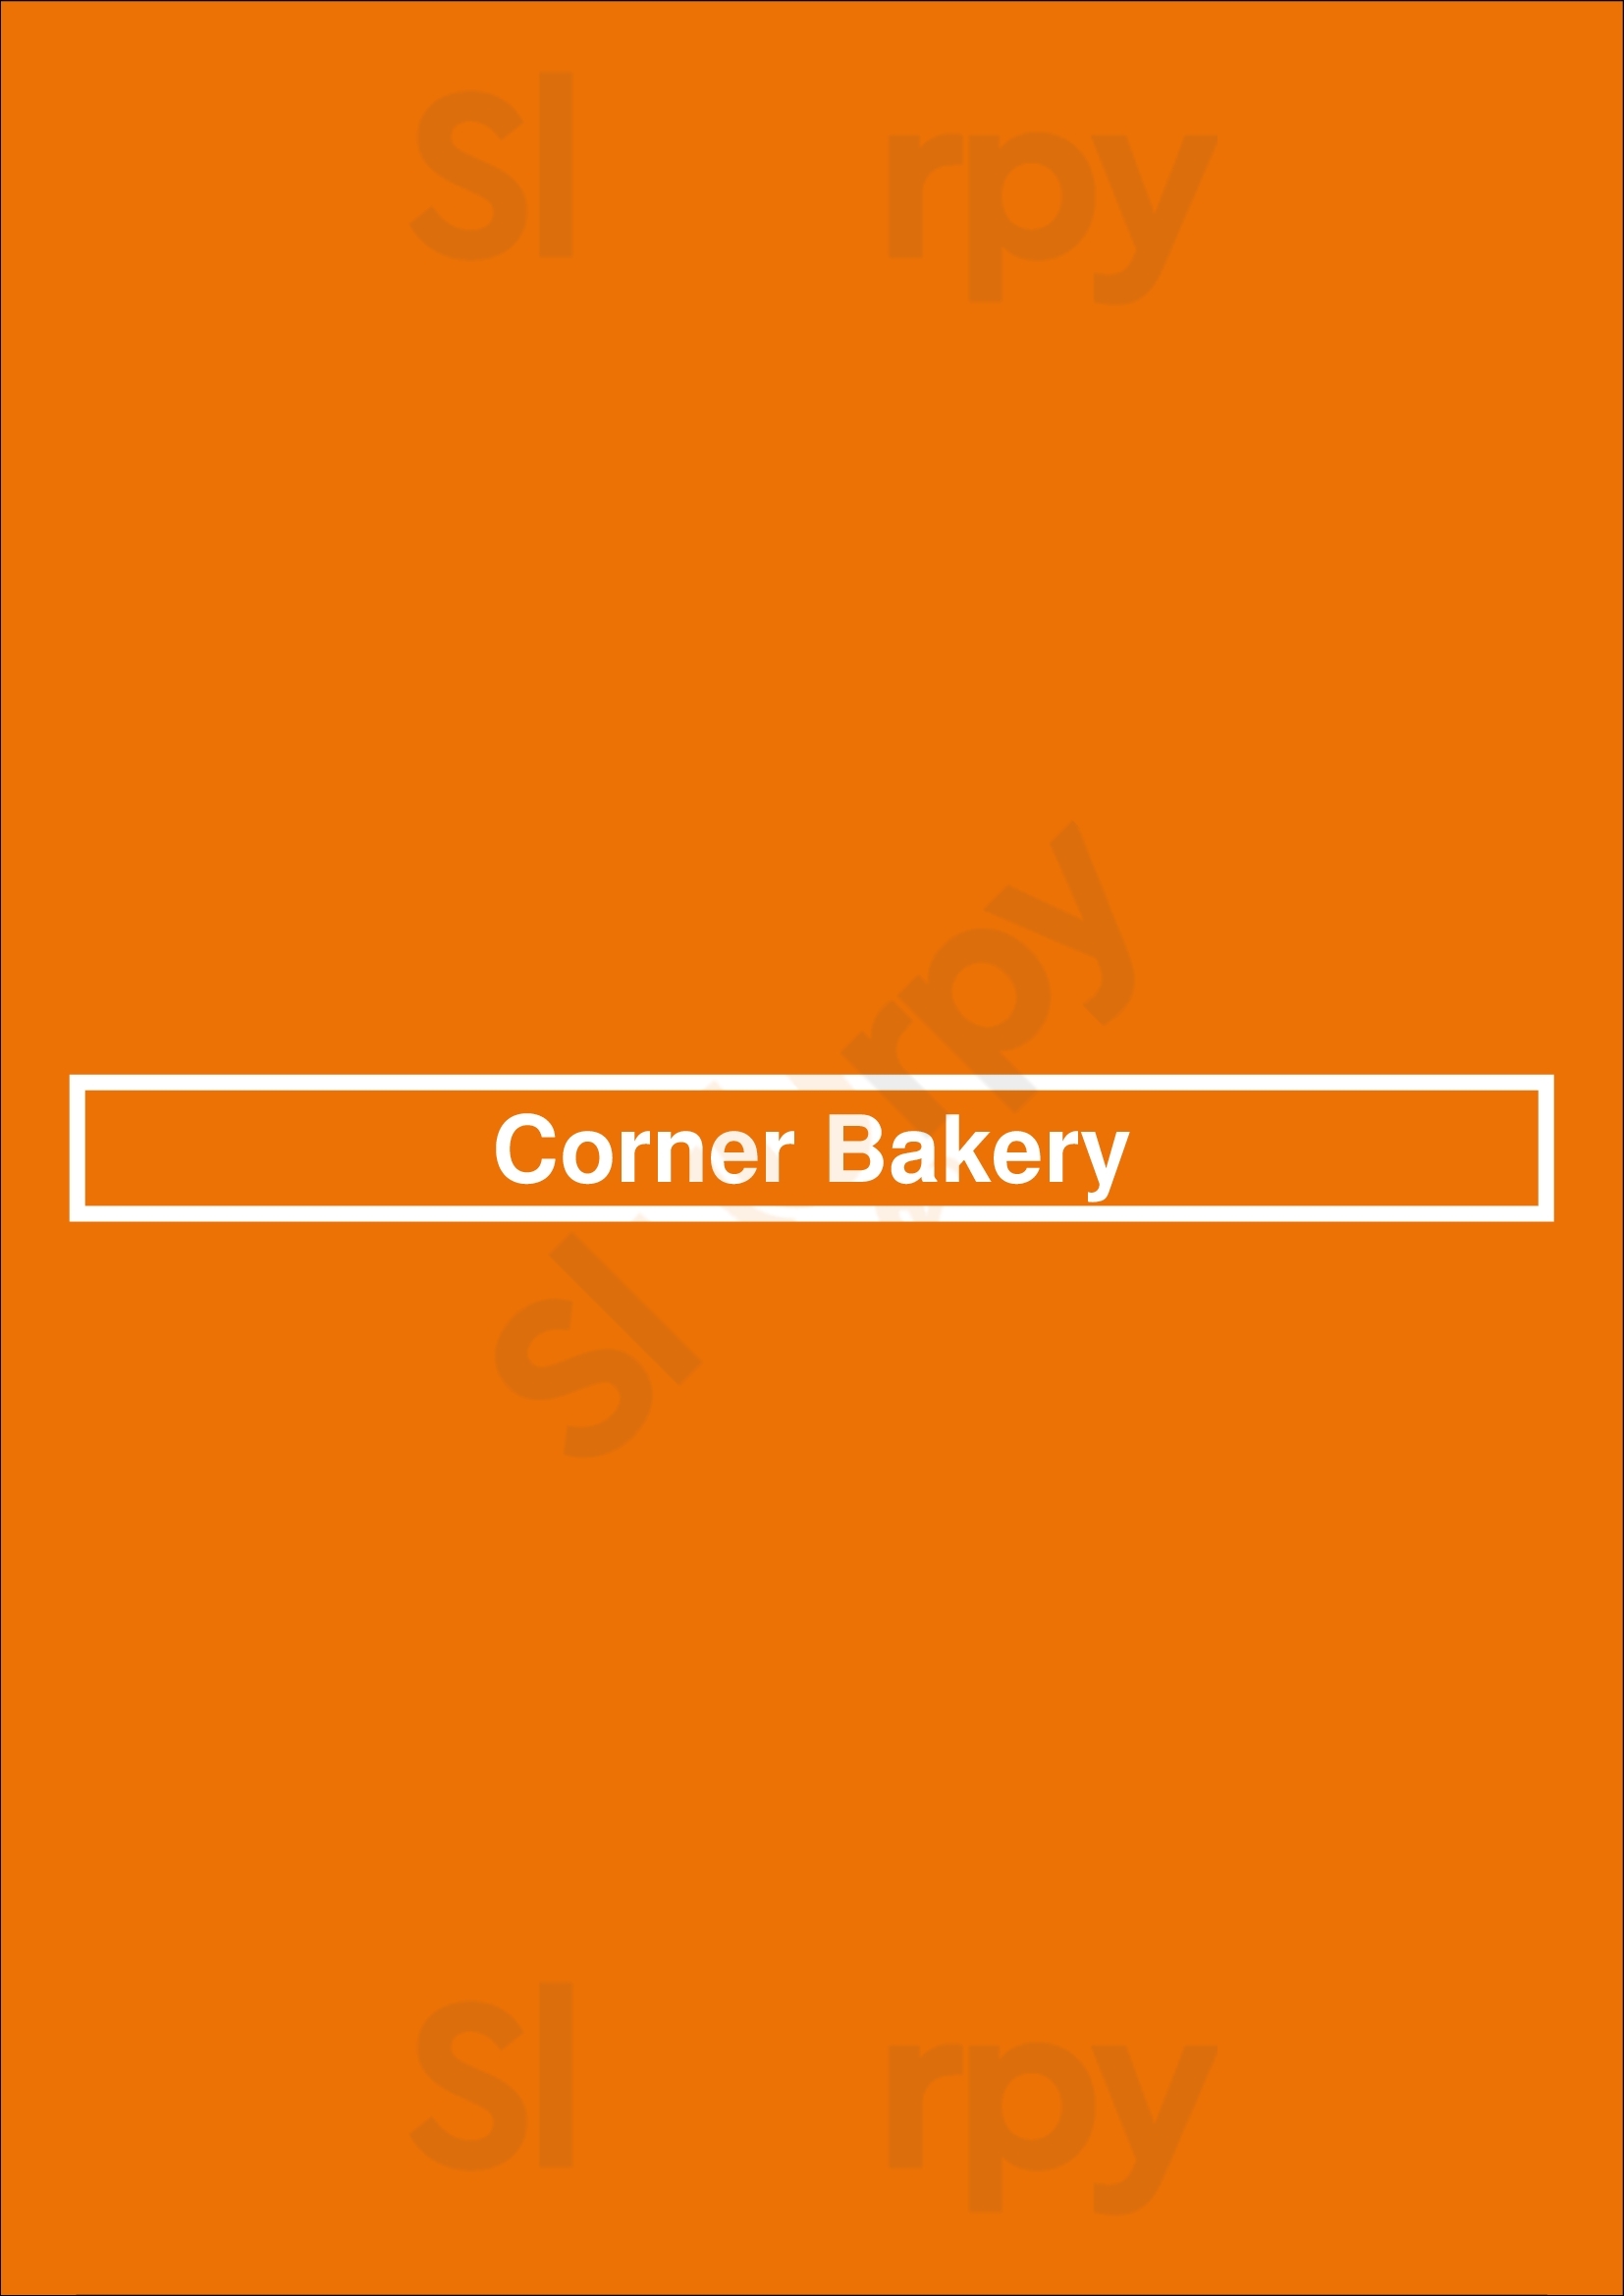 Corner Bakery Dallas Menu - 1